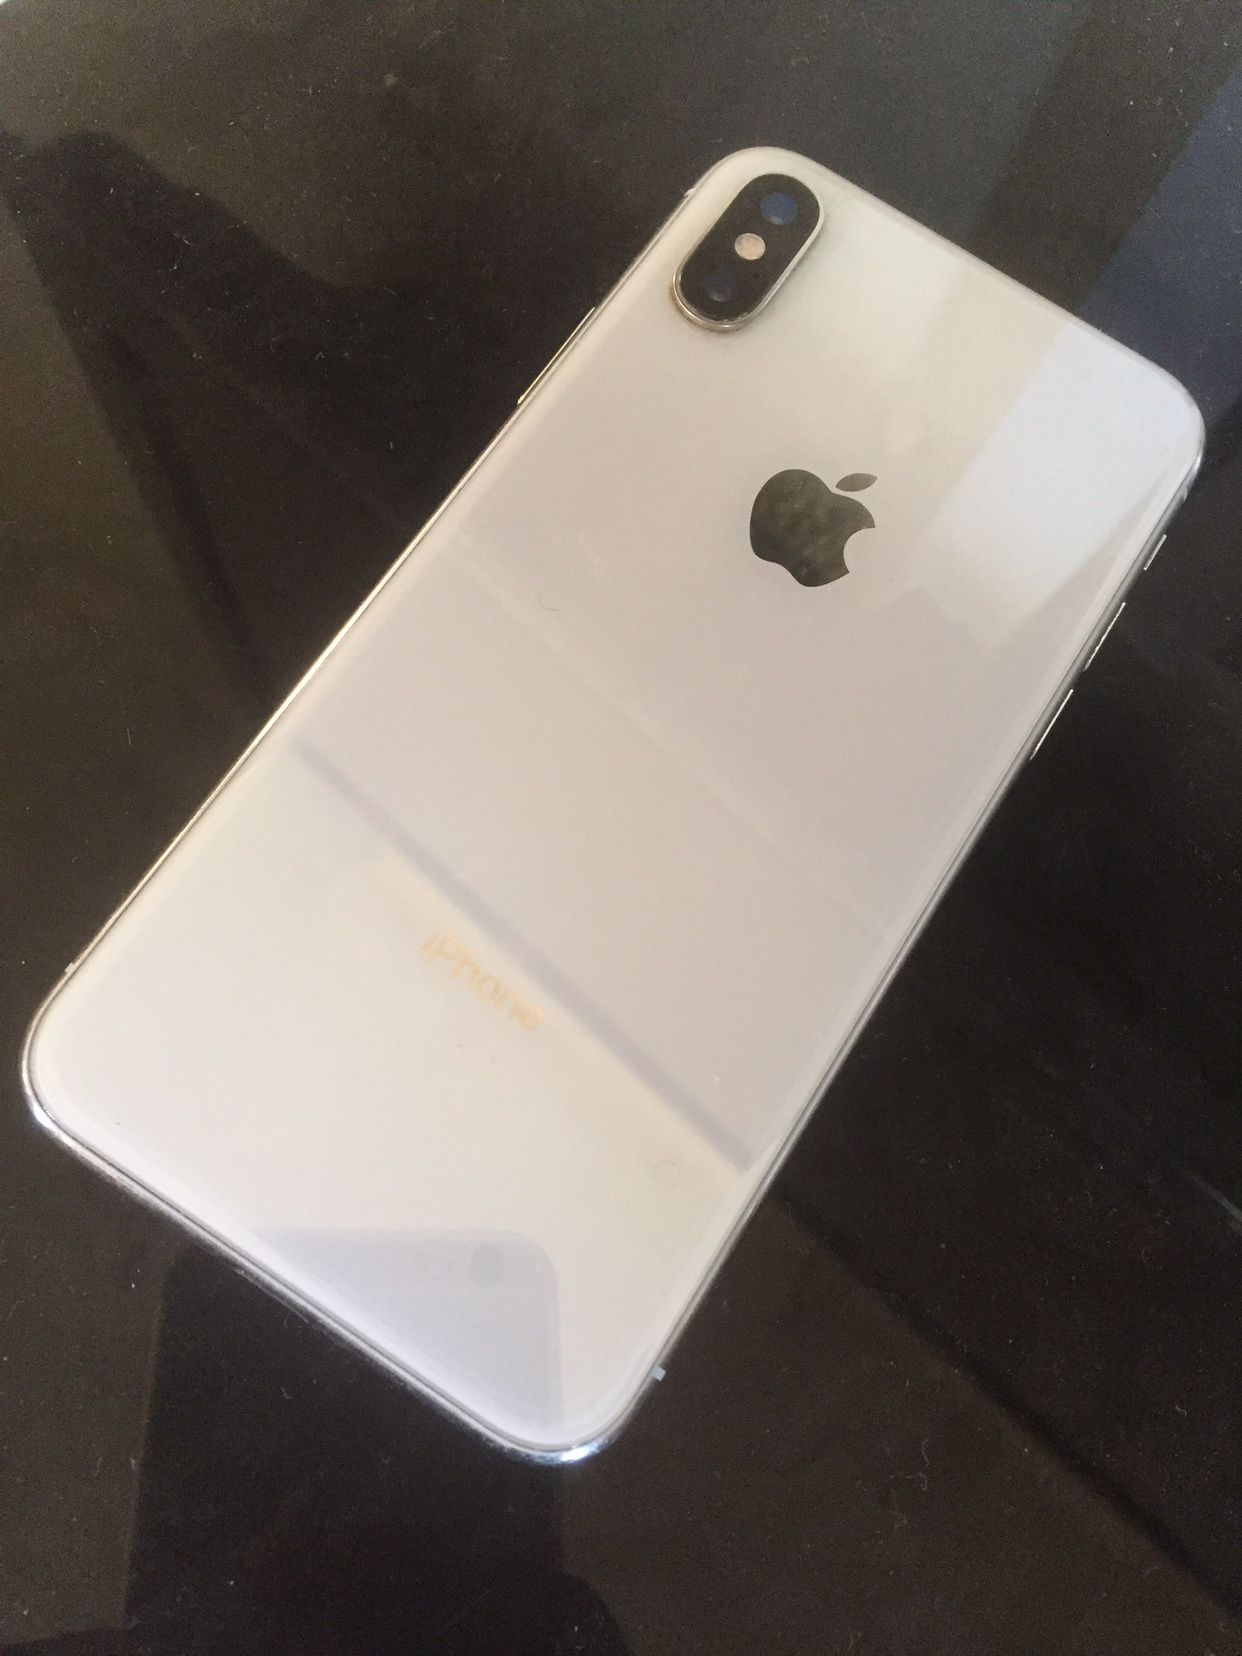 Apple iPhone X - 64GB - Silver (Unlocked) A1901 (GSM) (CA)